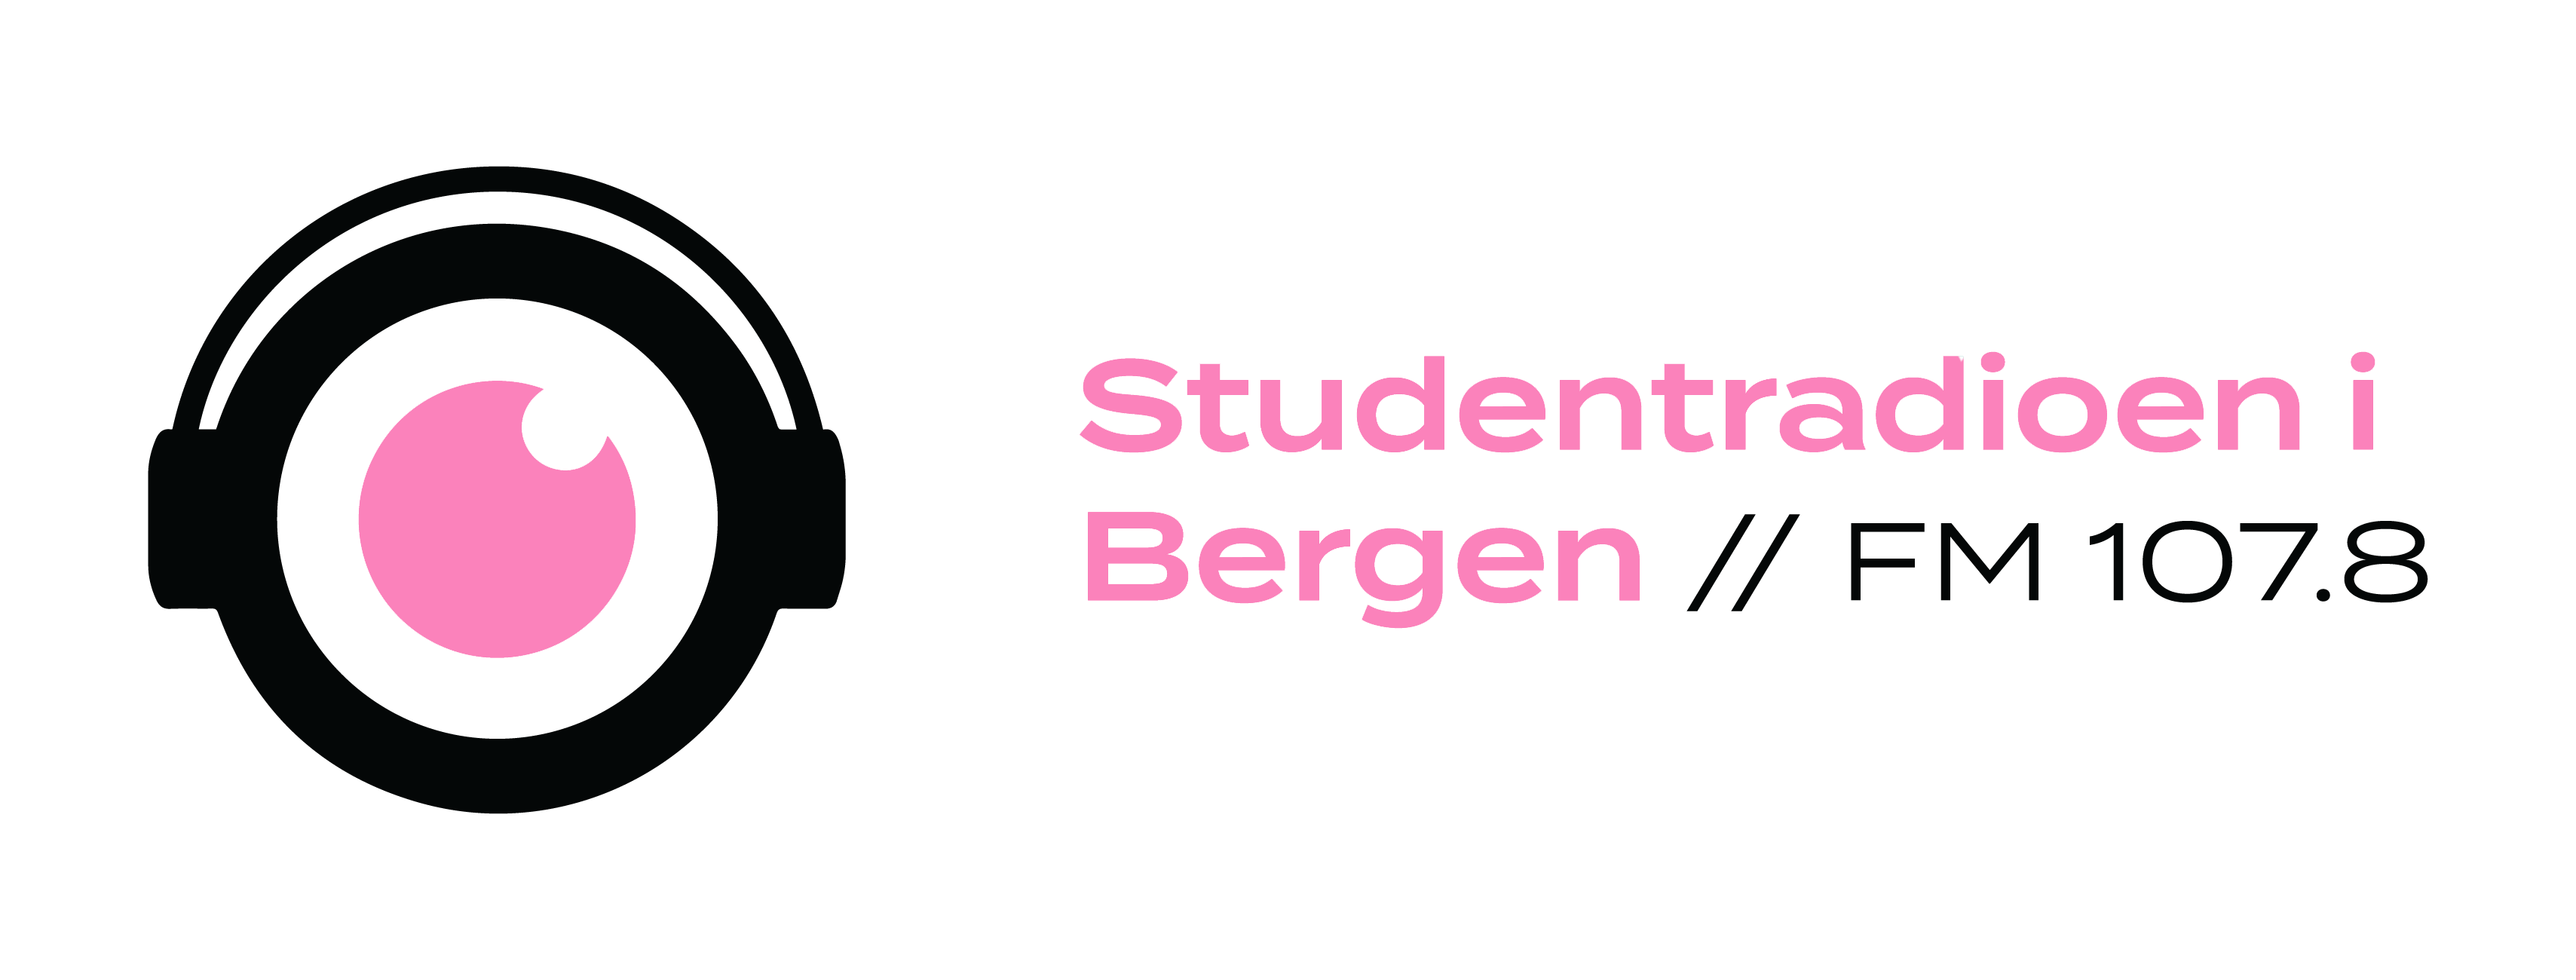 Studentradioen i Bergen